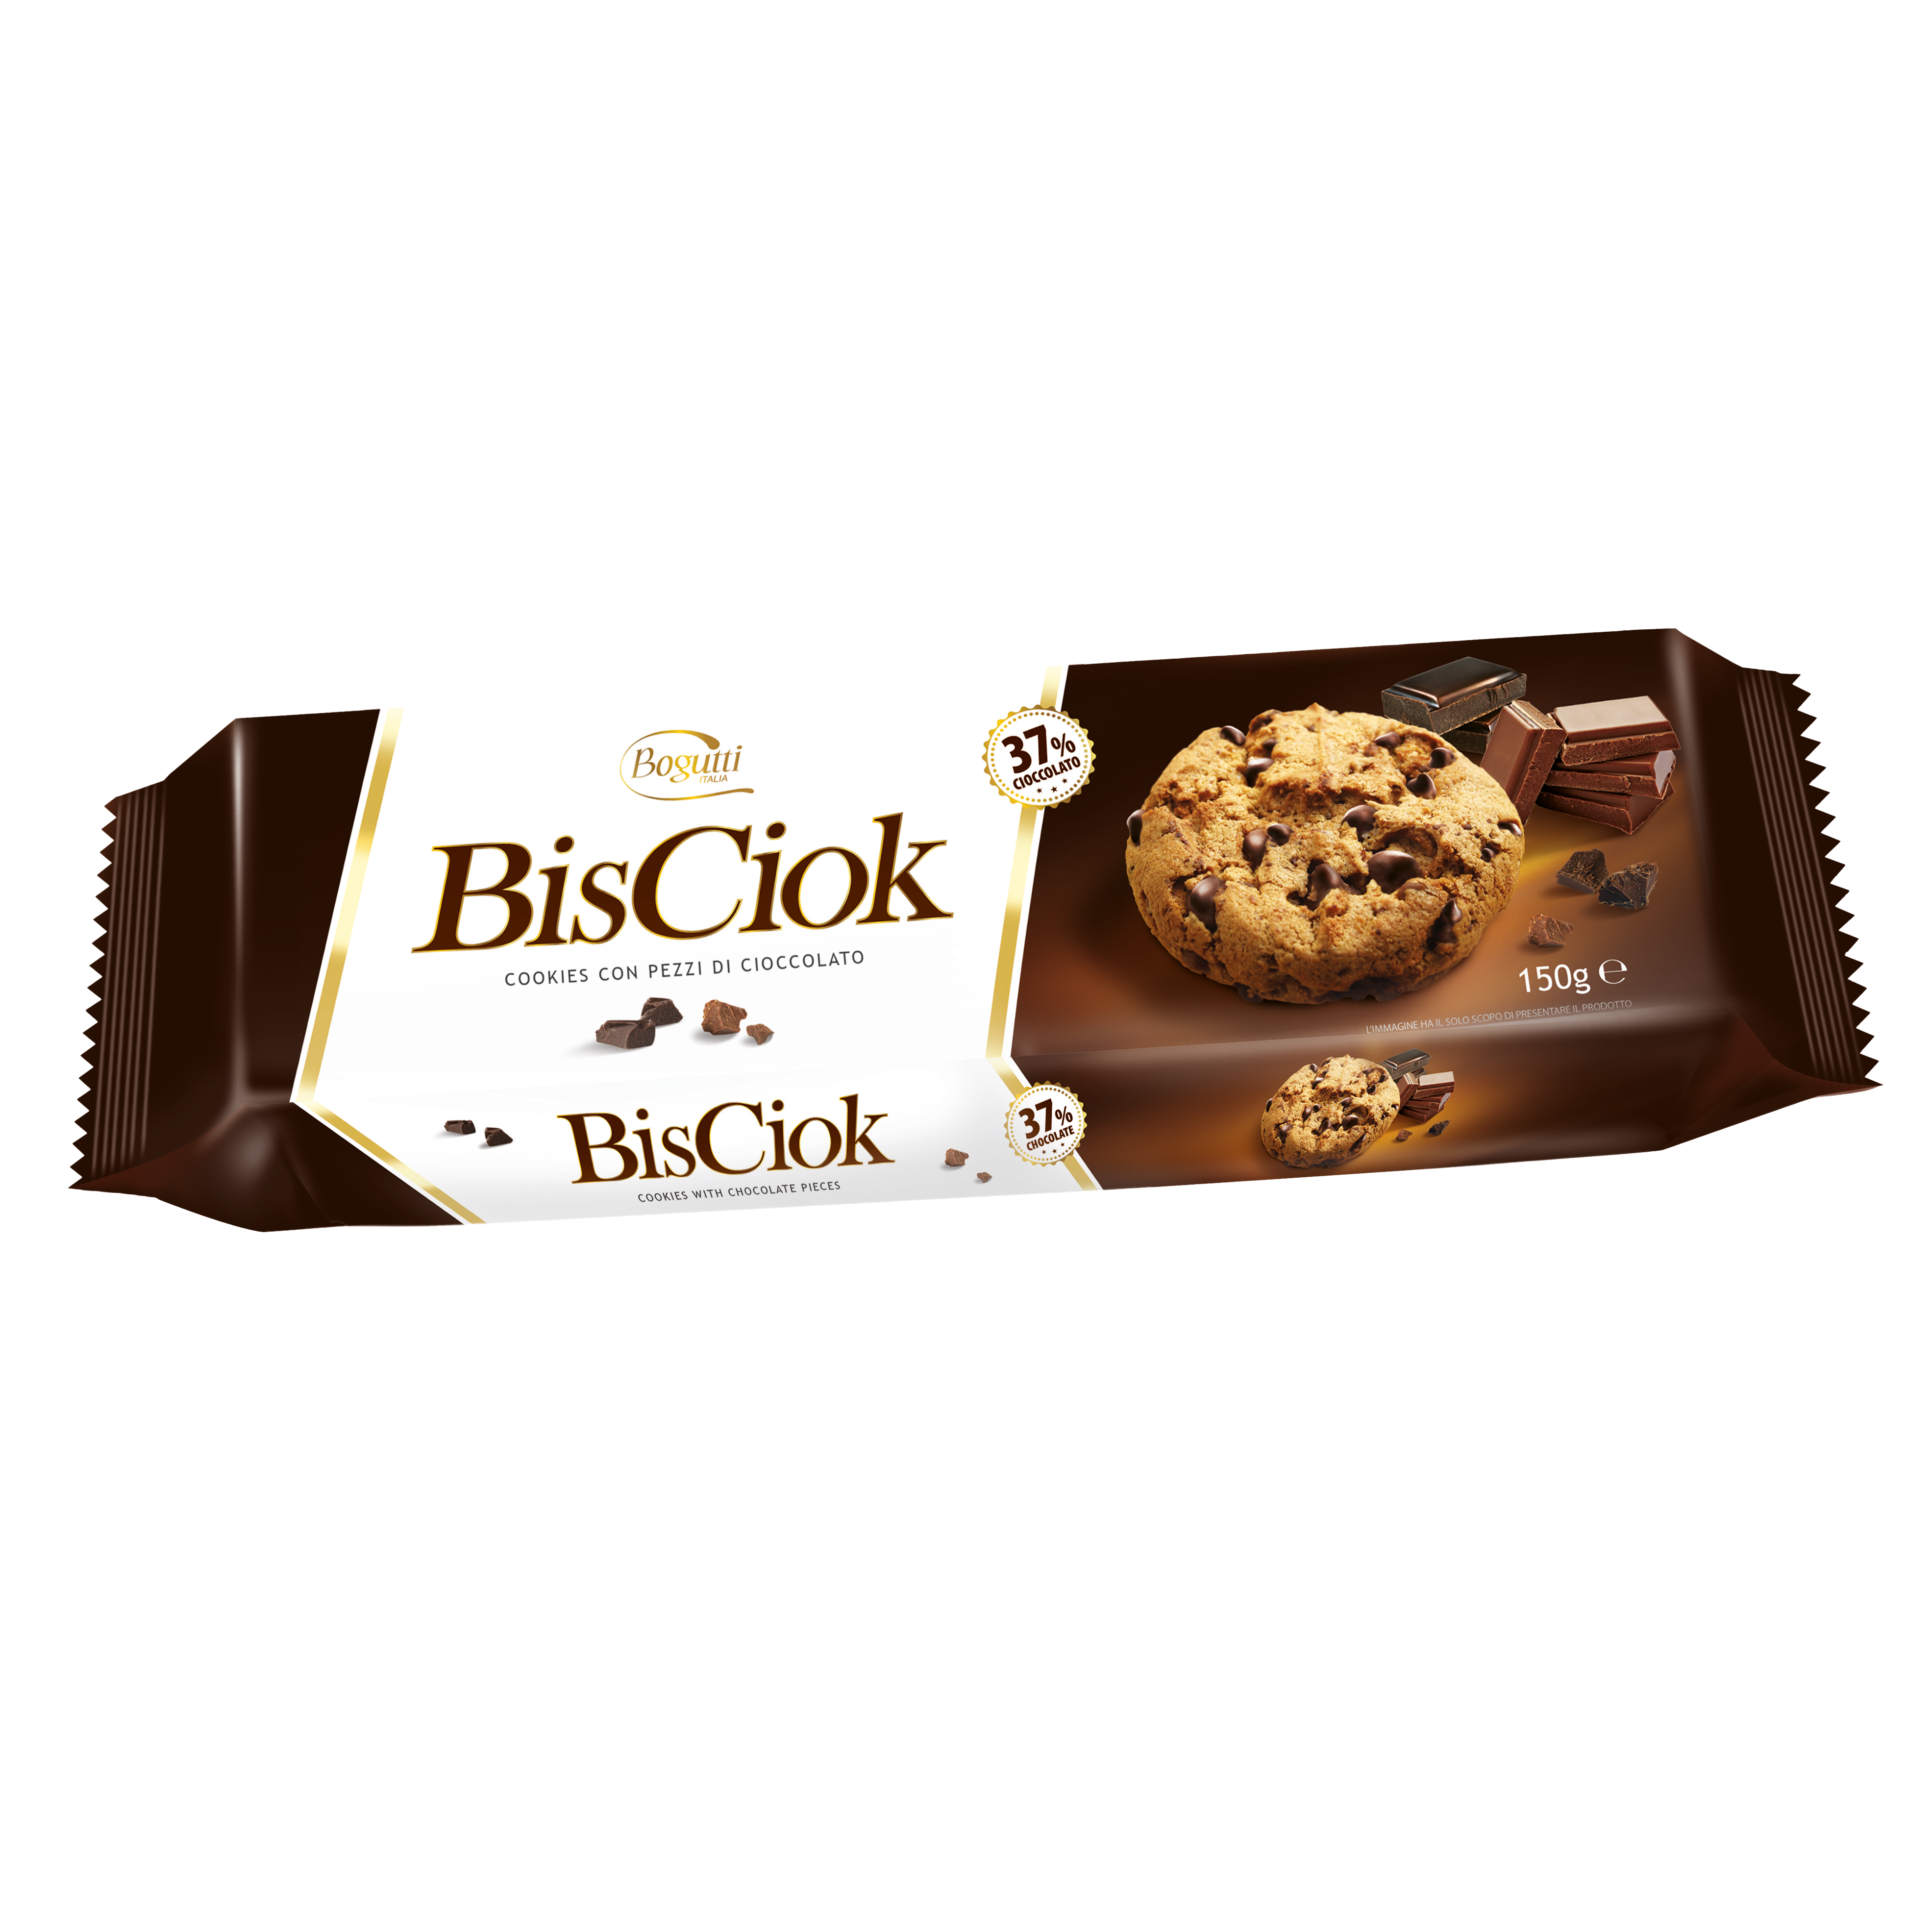 Bis Ciok – Cookies with chocolate /37%/